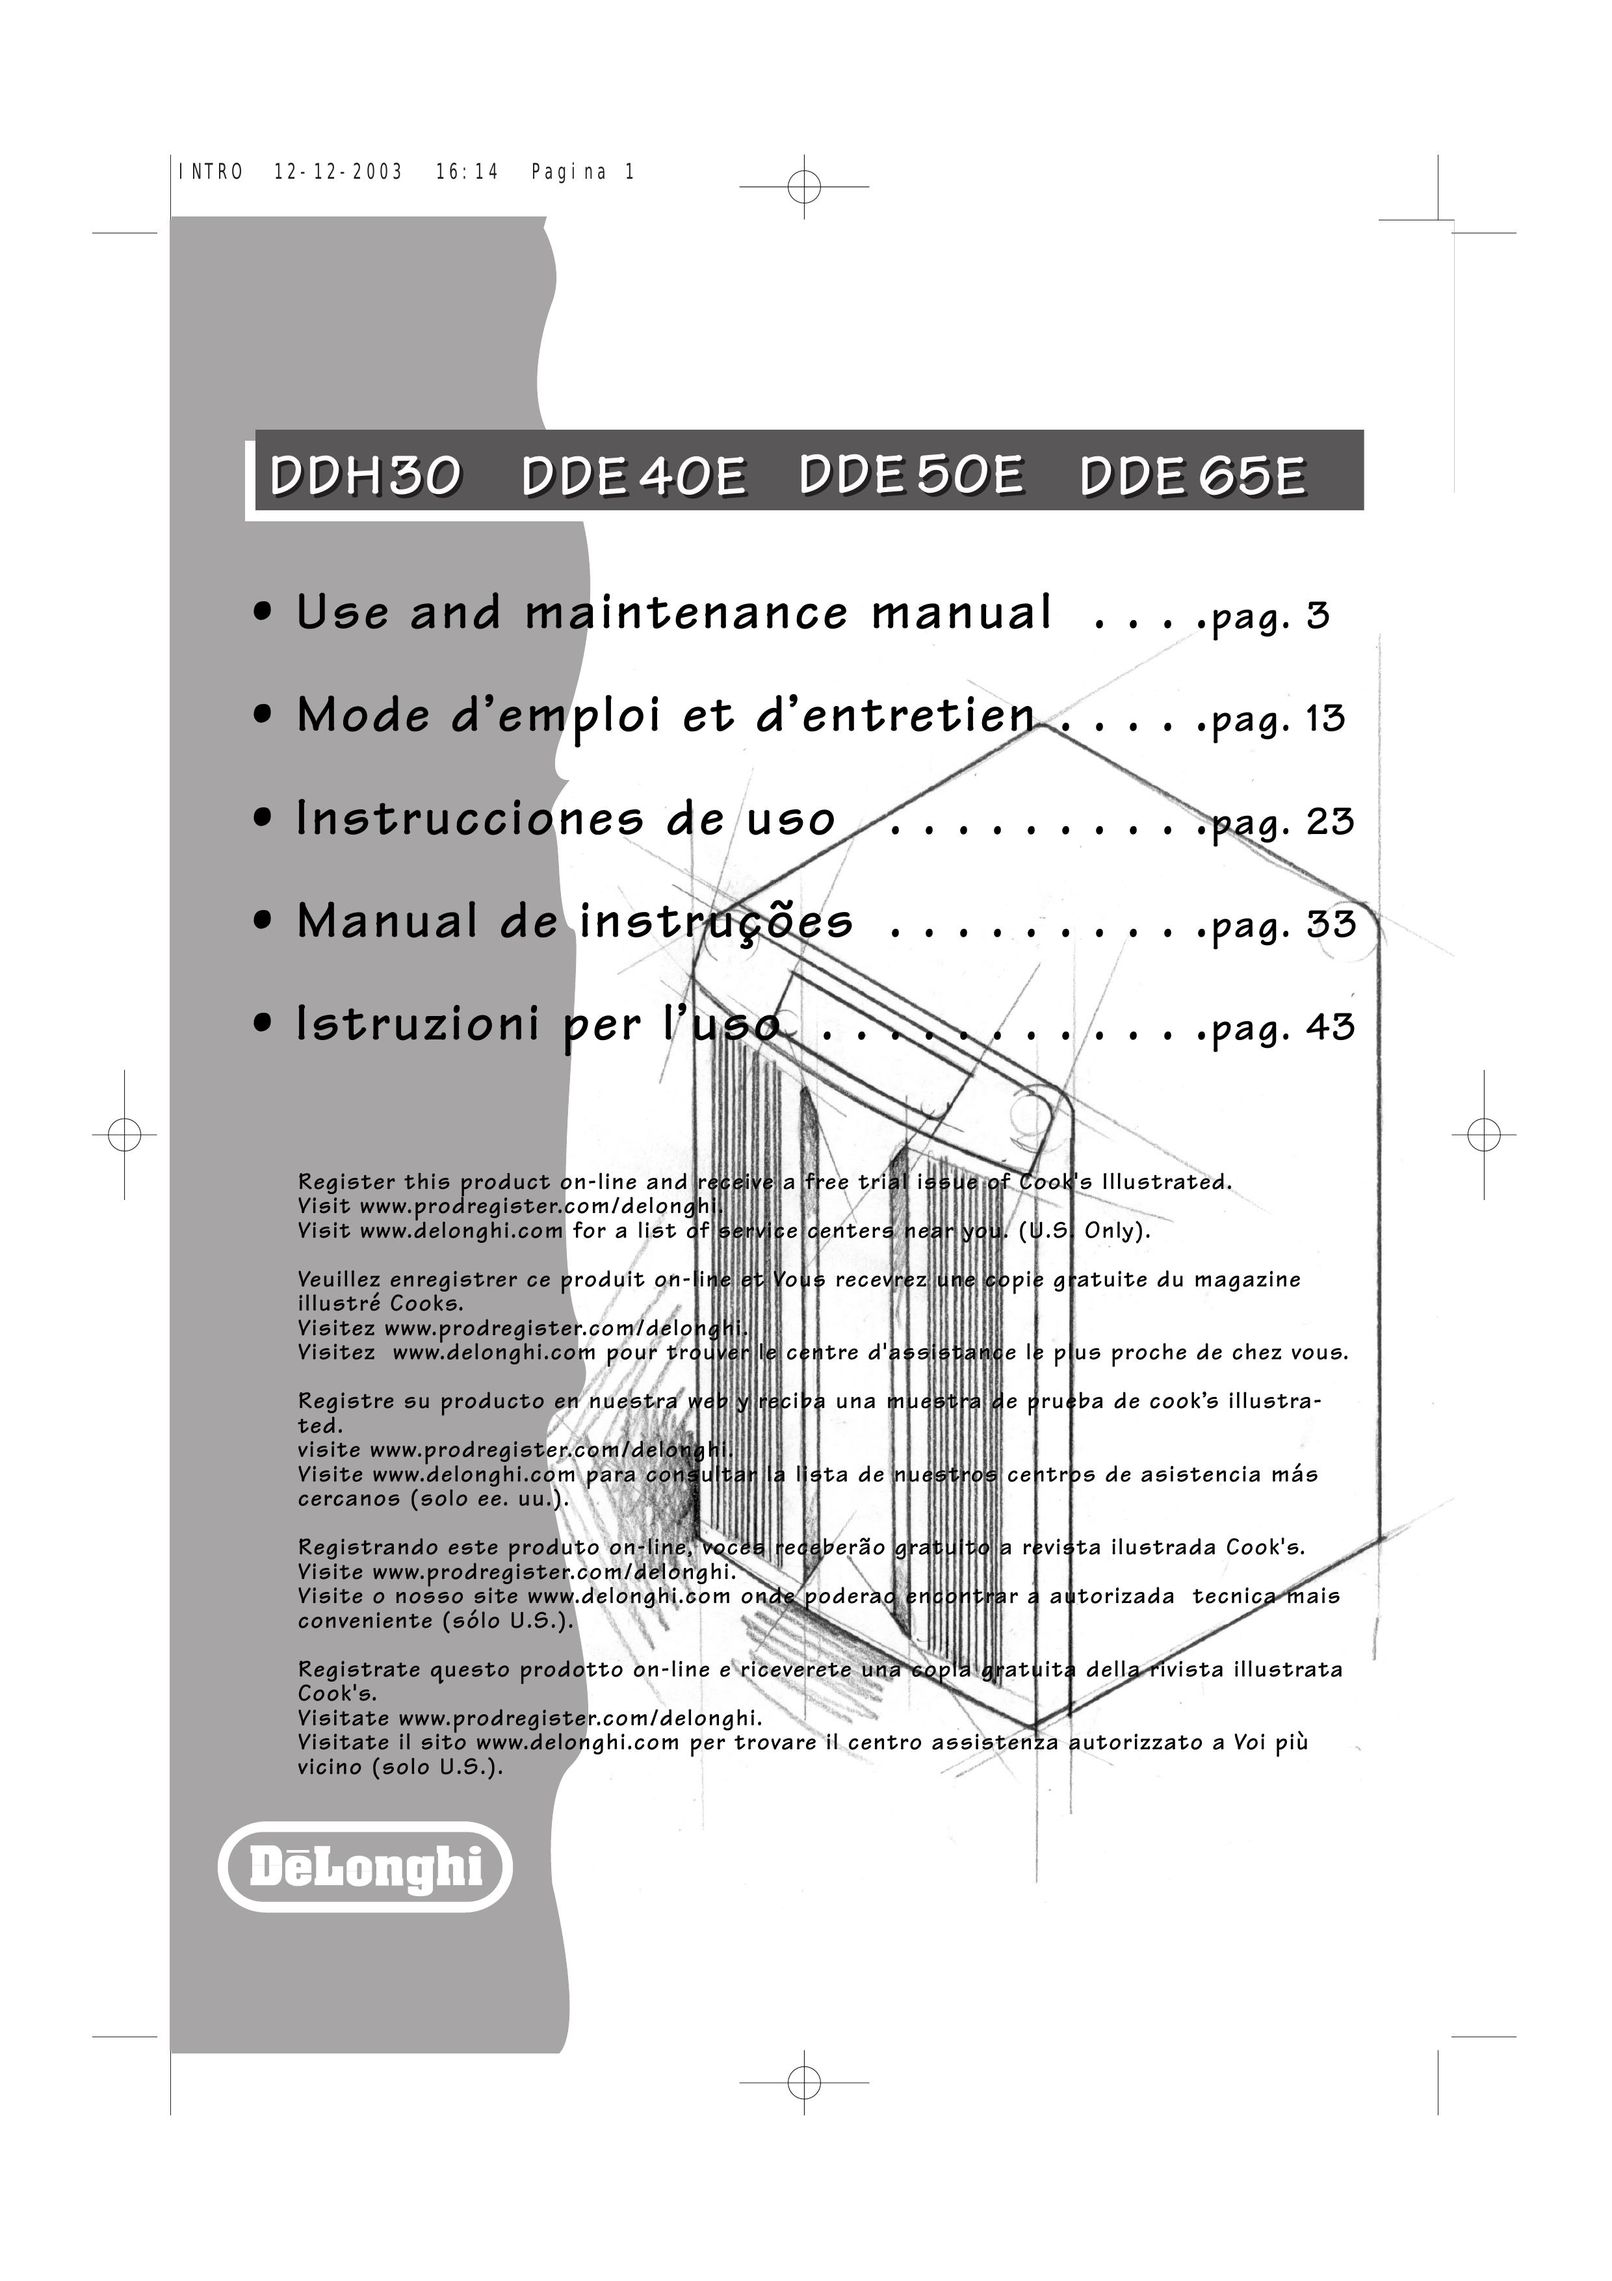 DeLonghi 40EDDH30 Air Cleaner User Manual